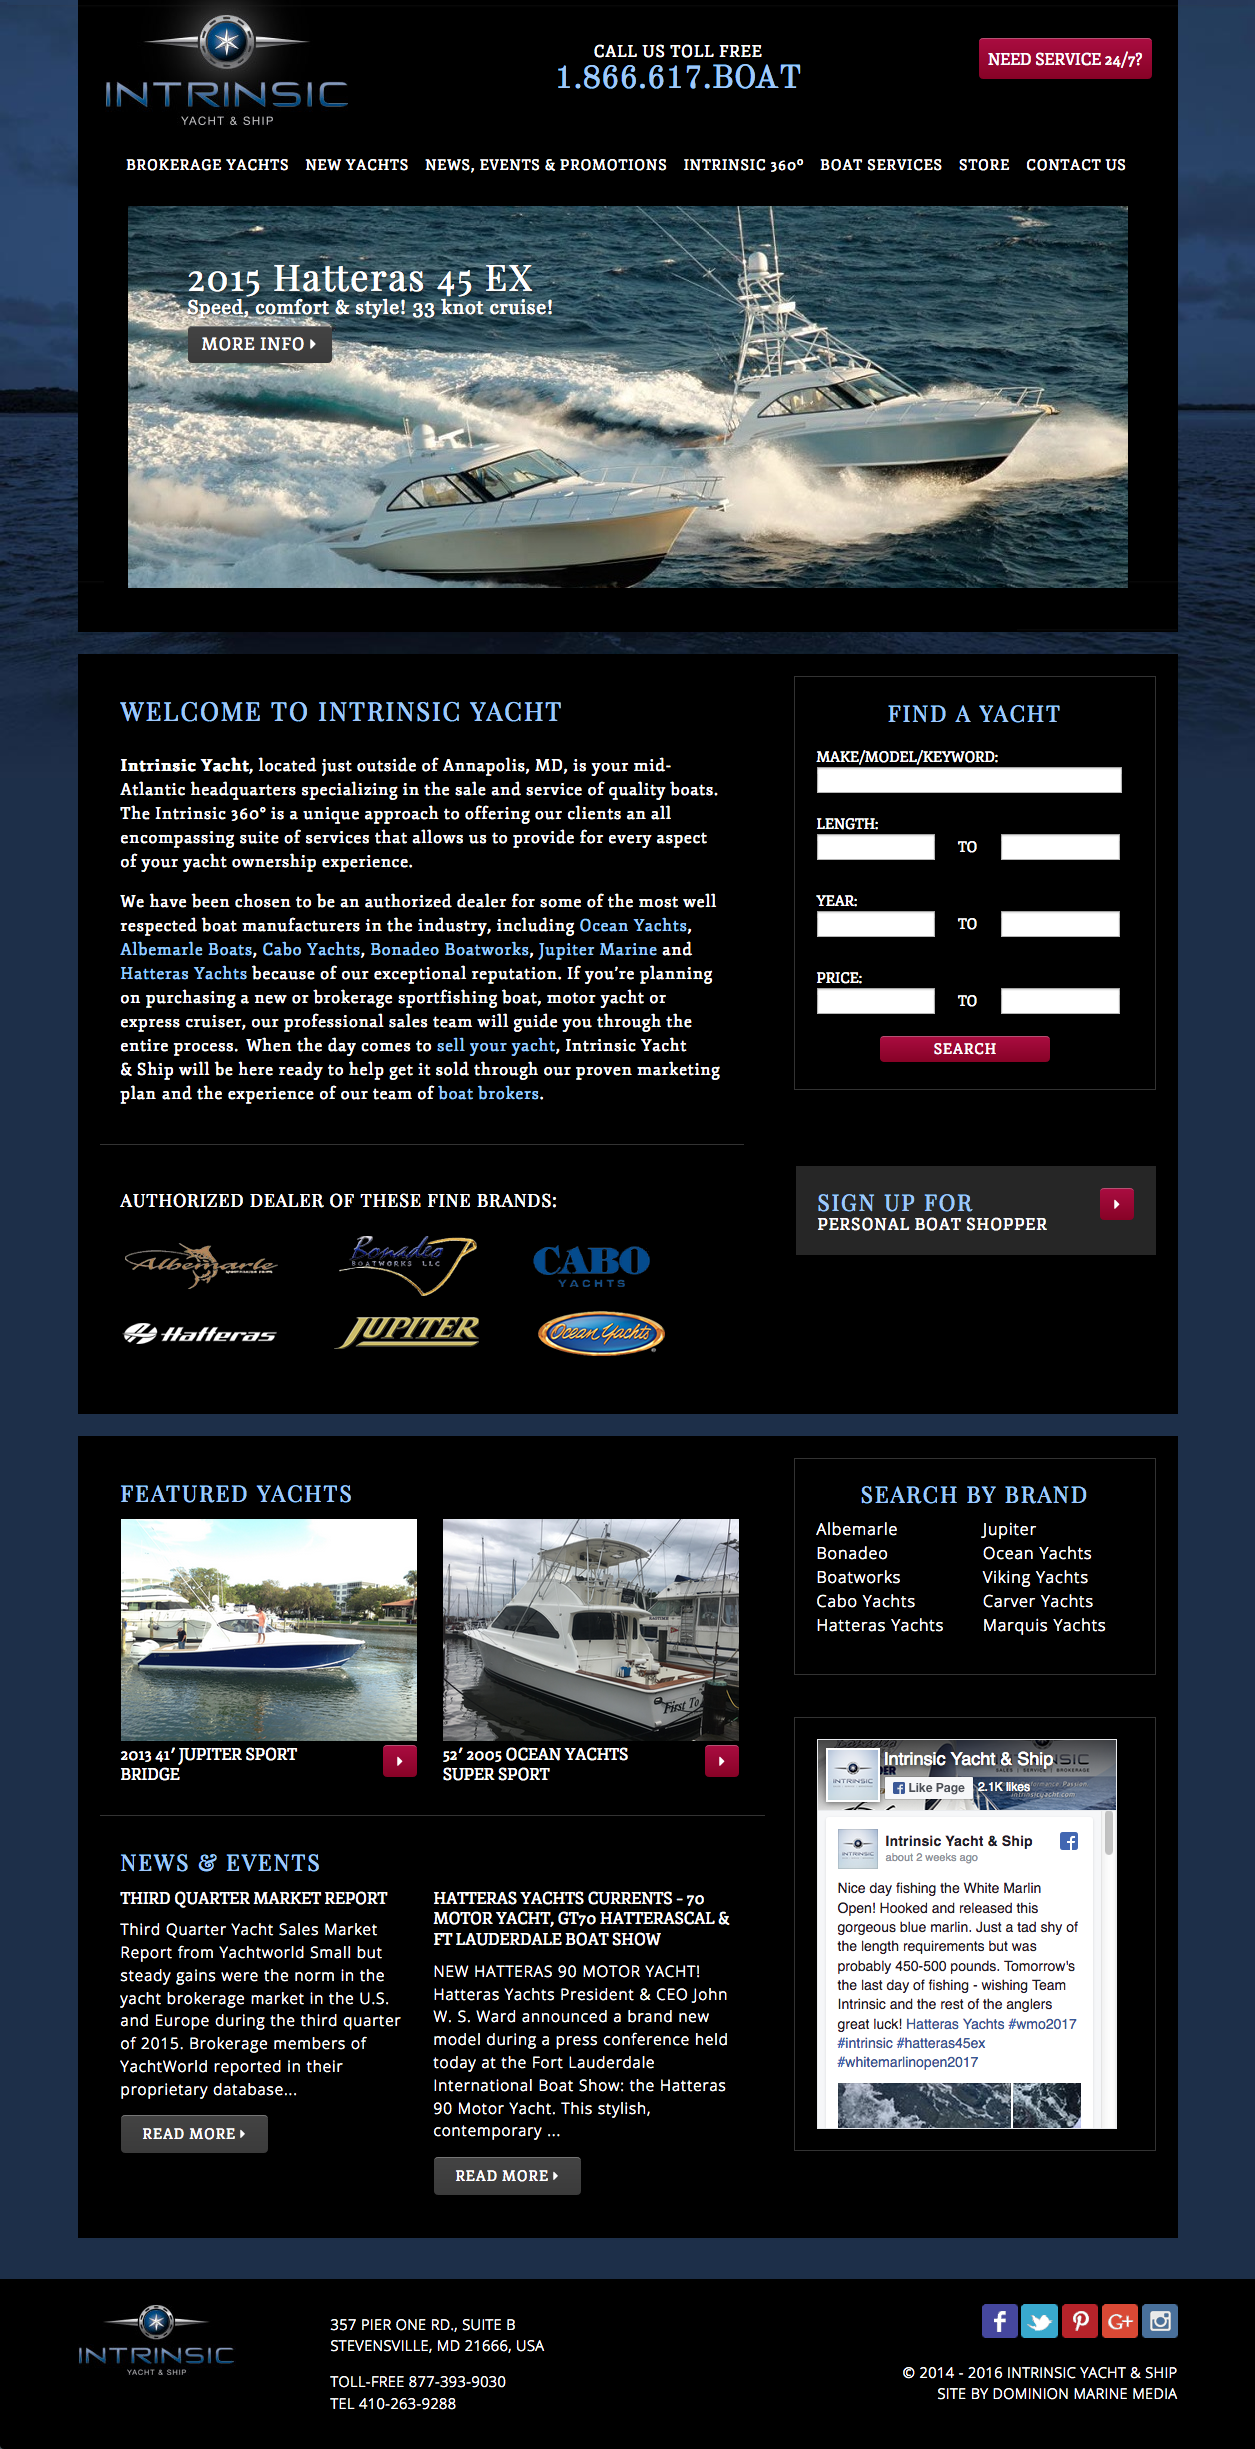 Intrinsic Yacht & Ship web site